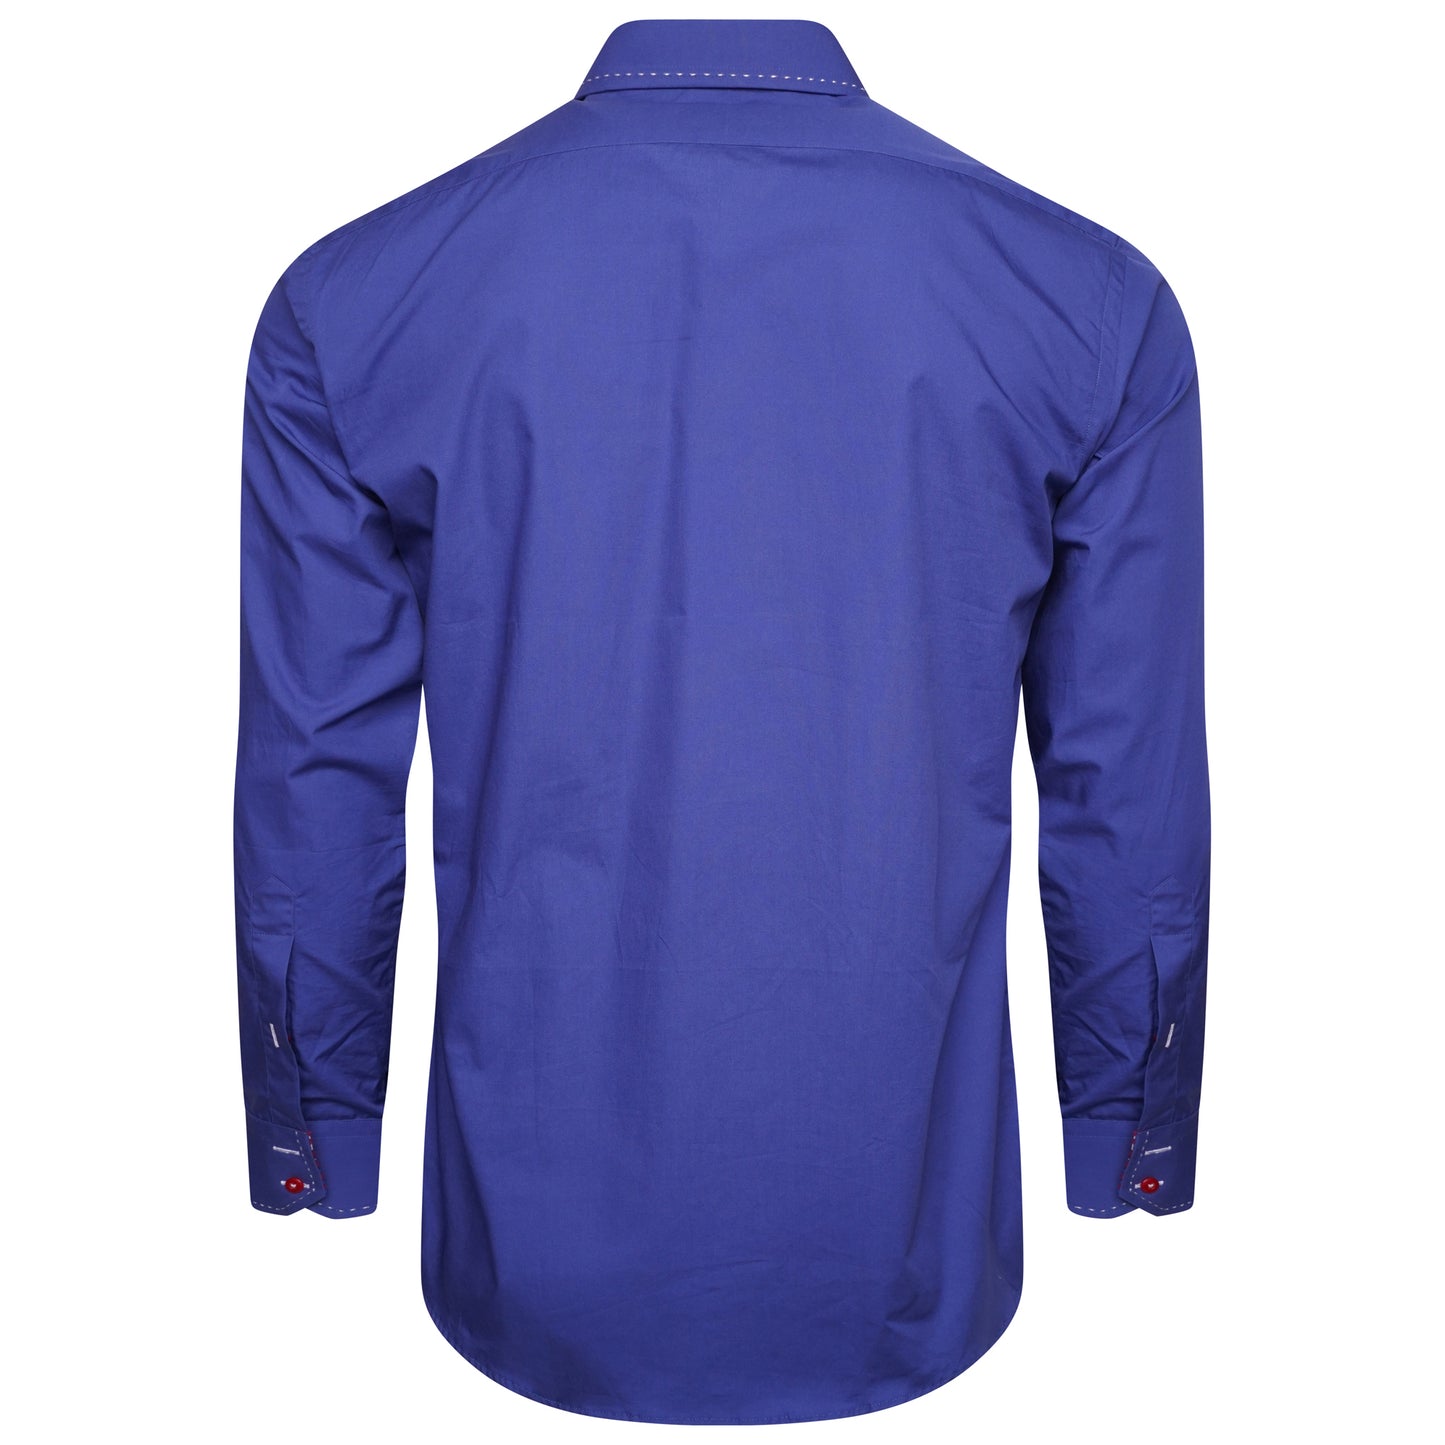 Men's Royal Blue Long Sleeve Shirt